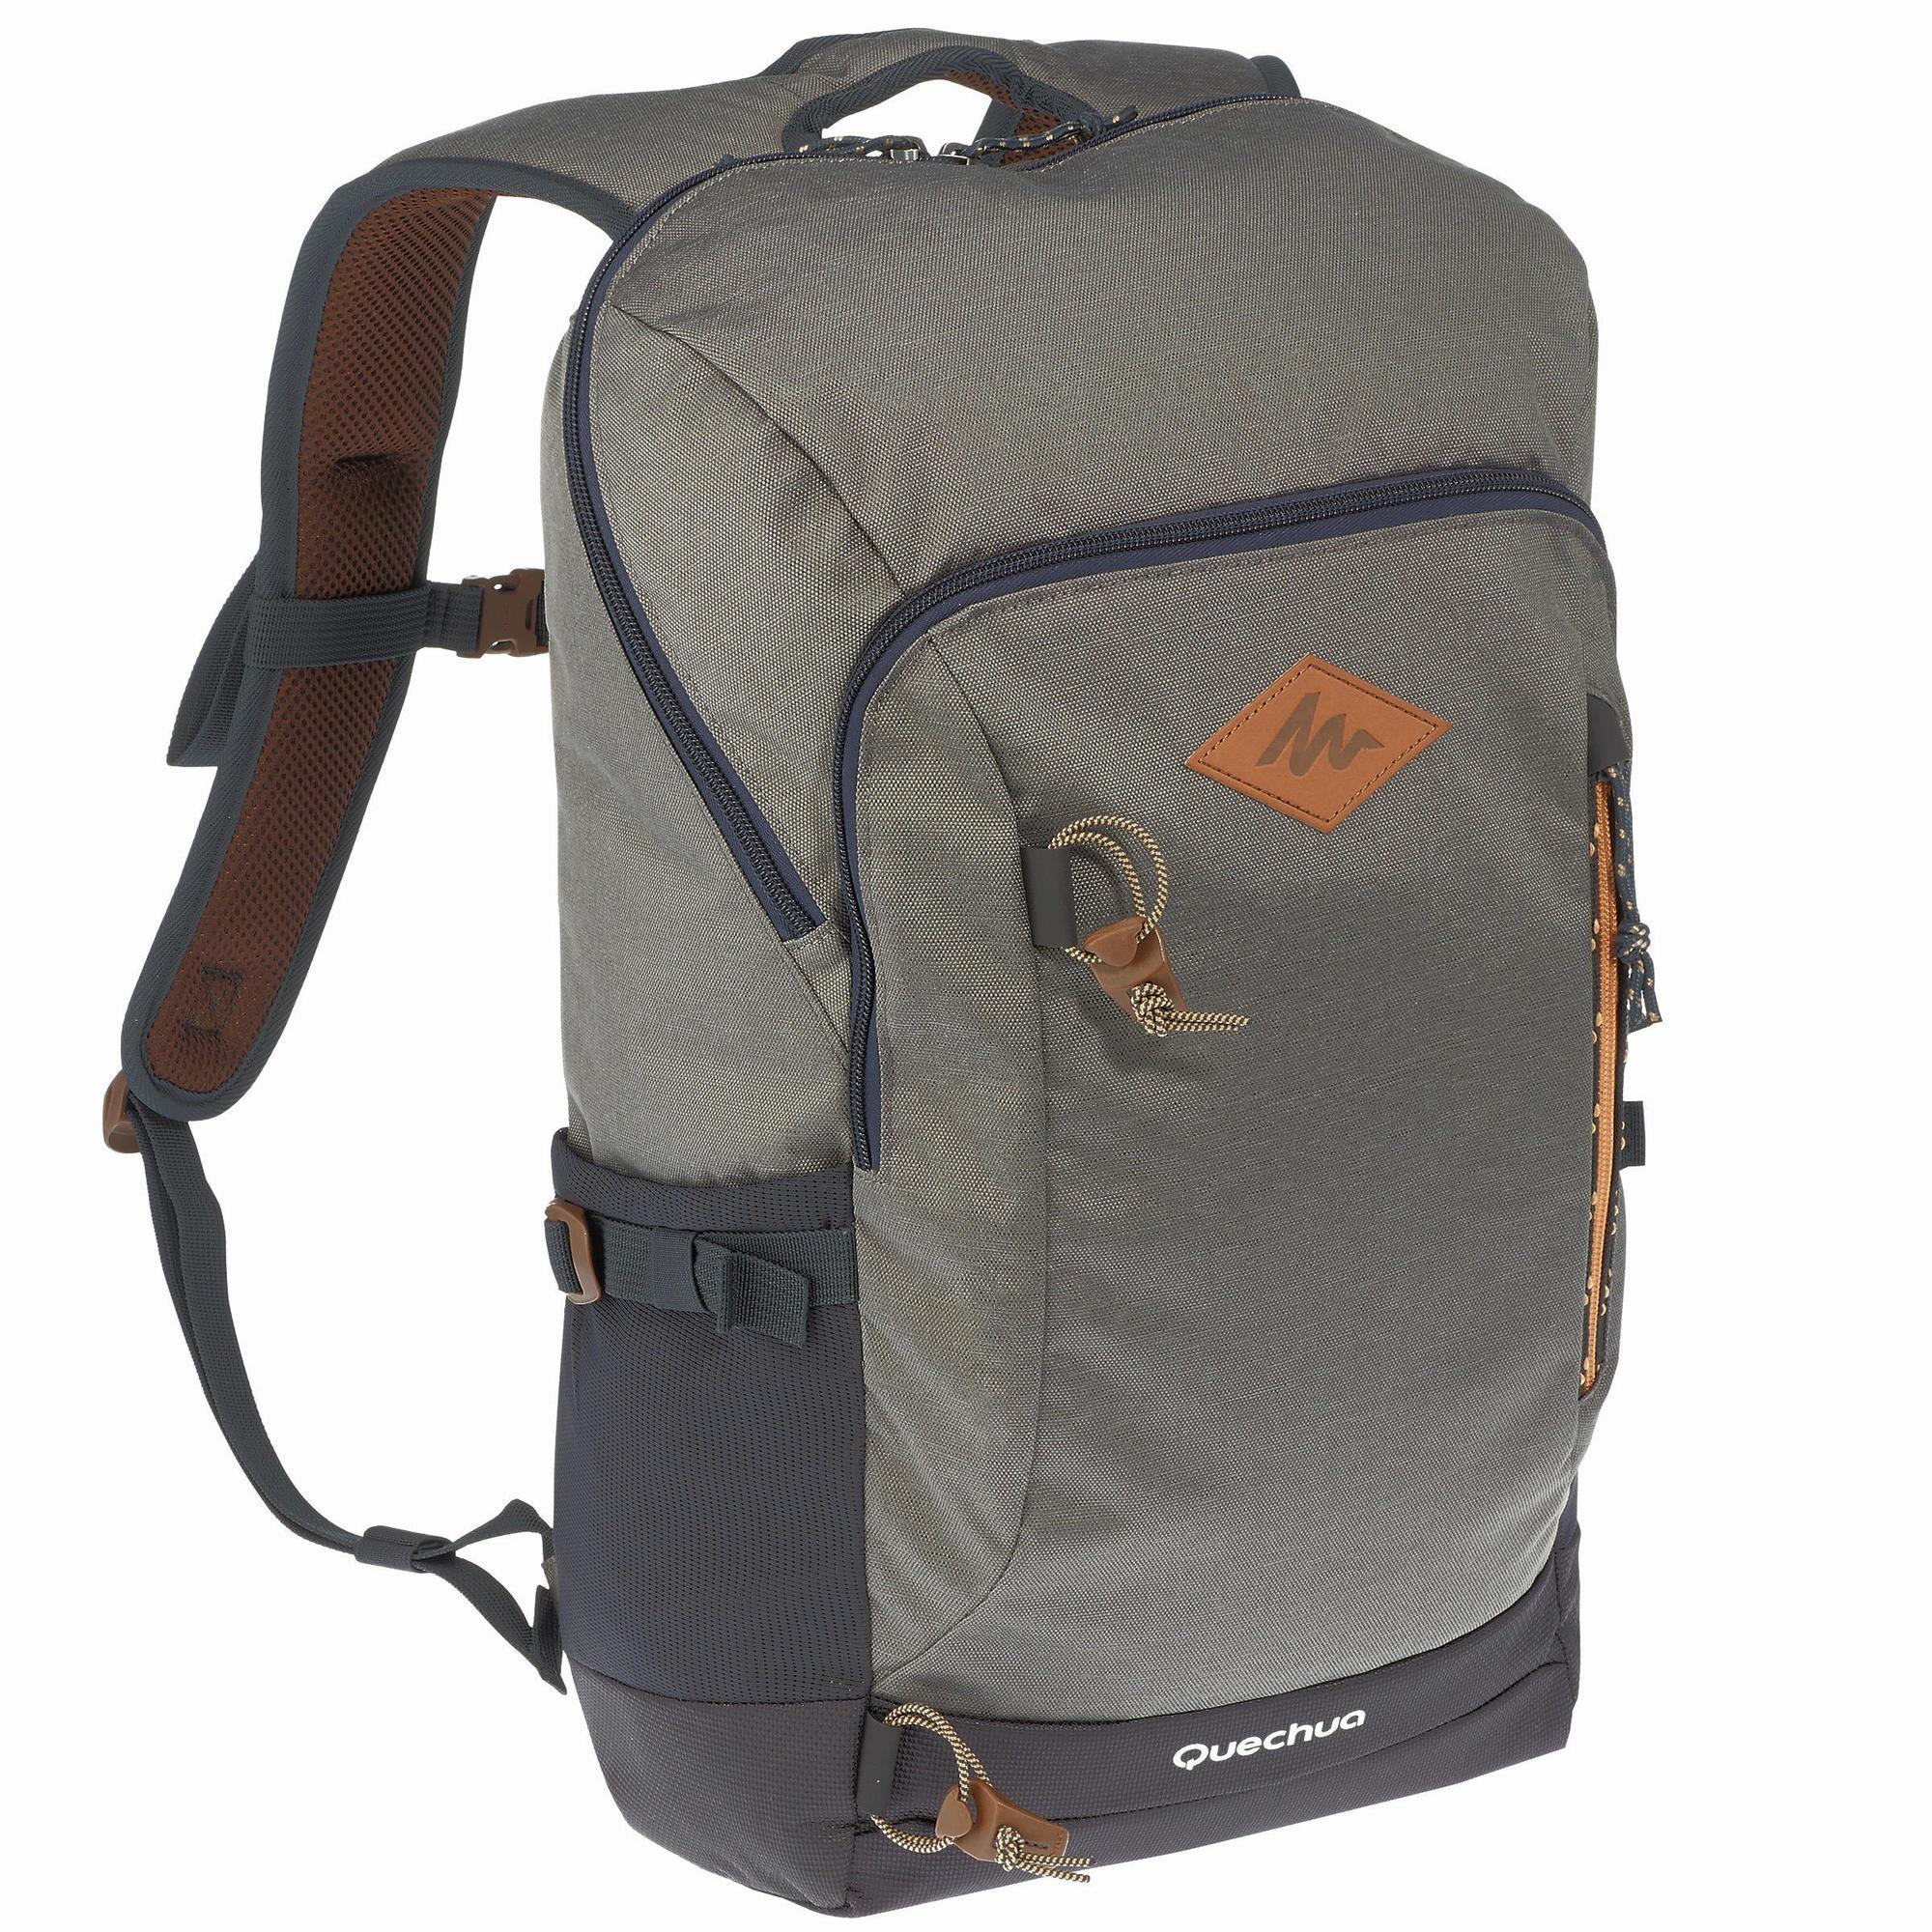 decathlon 20 litre backpack